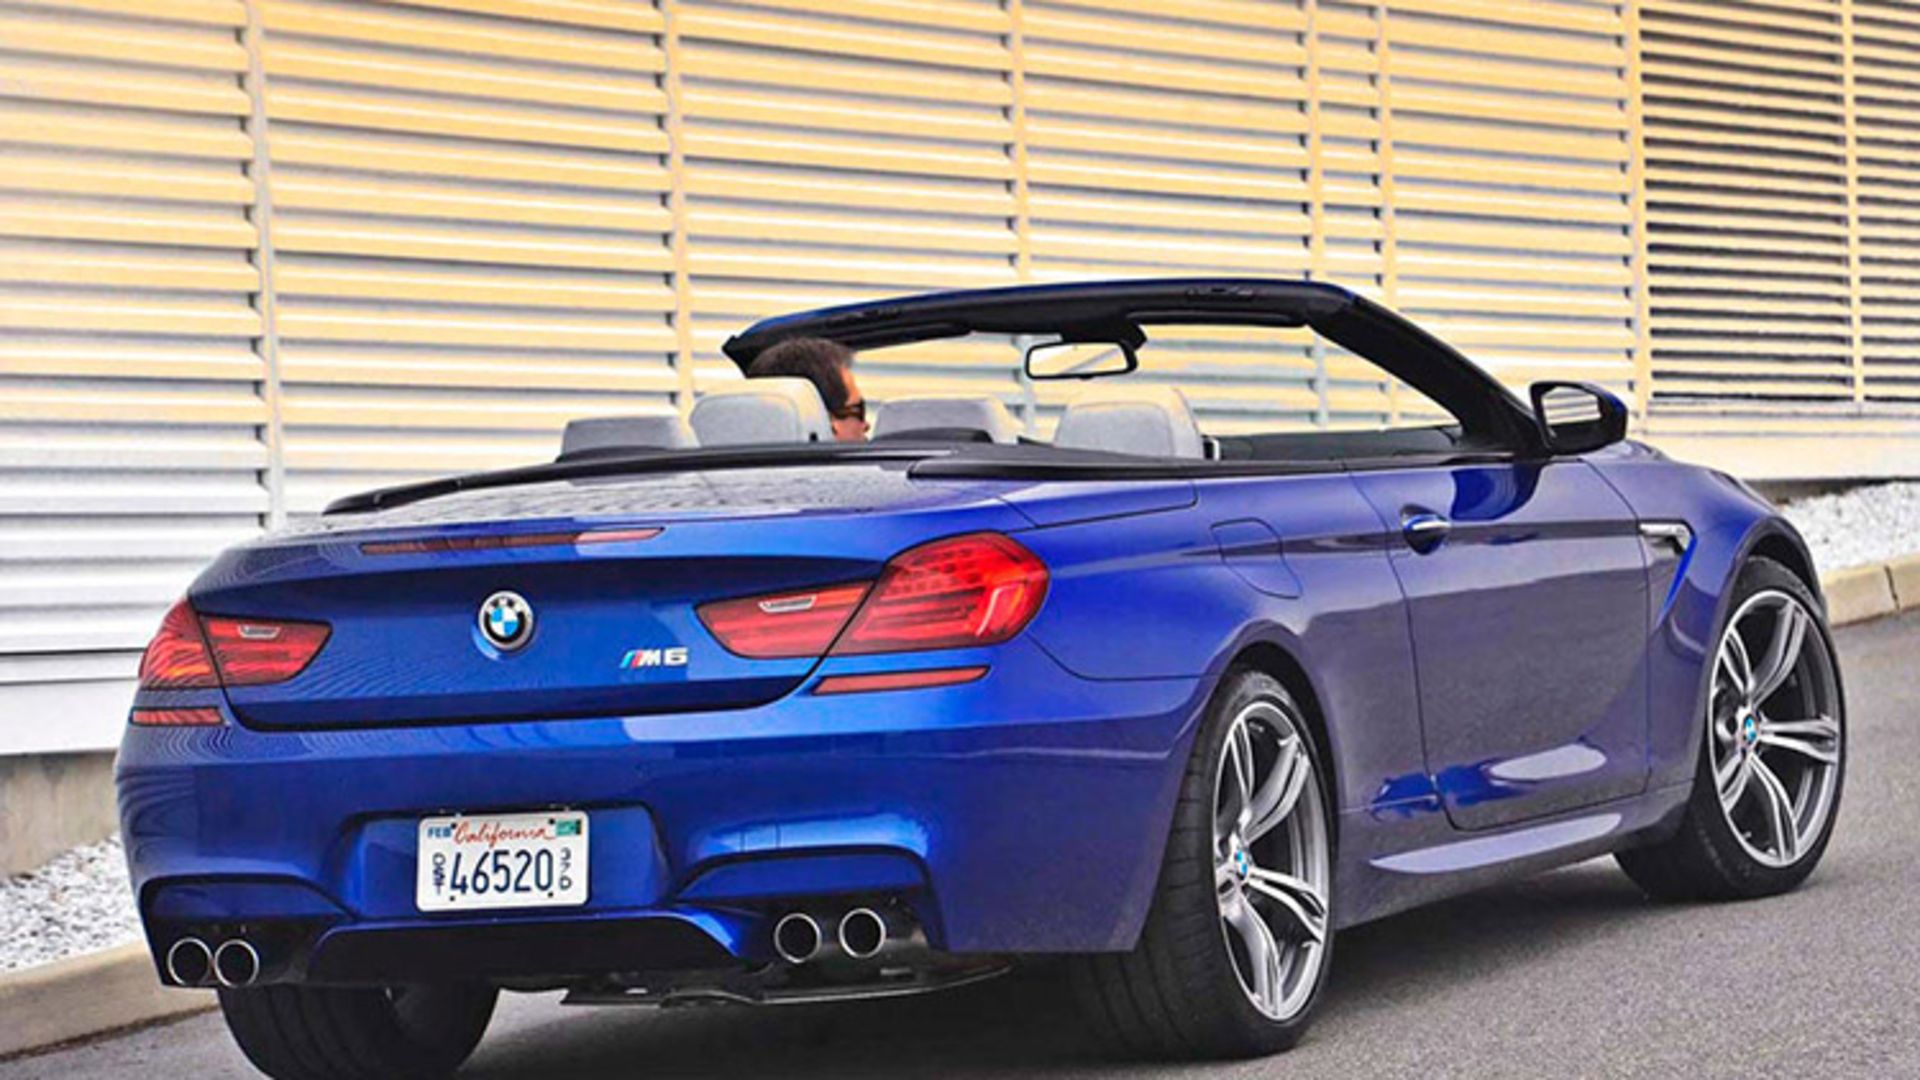 BMW M6 convertible